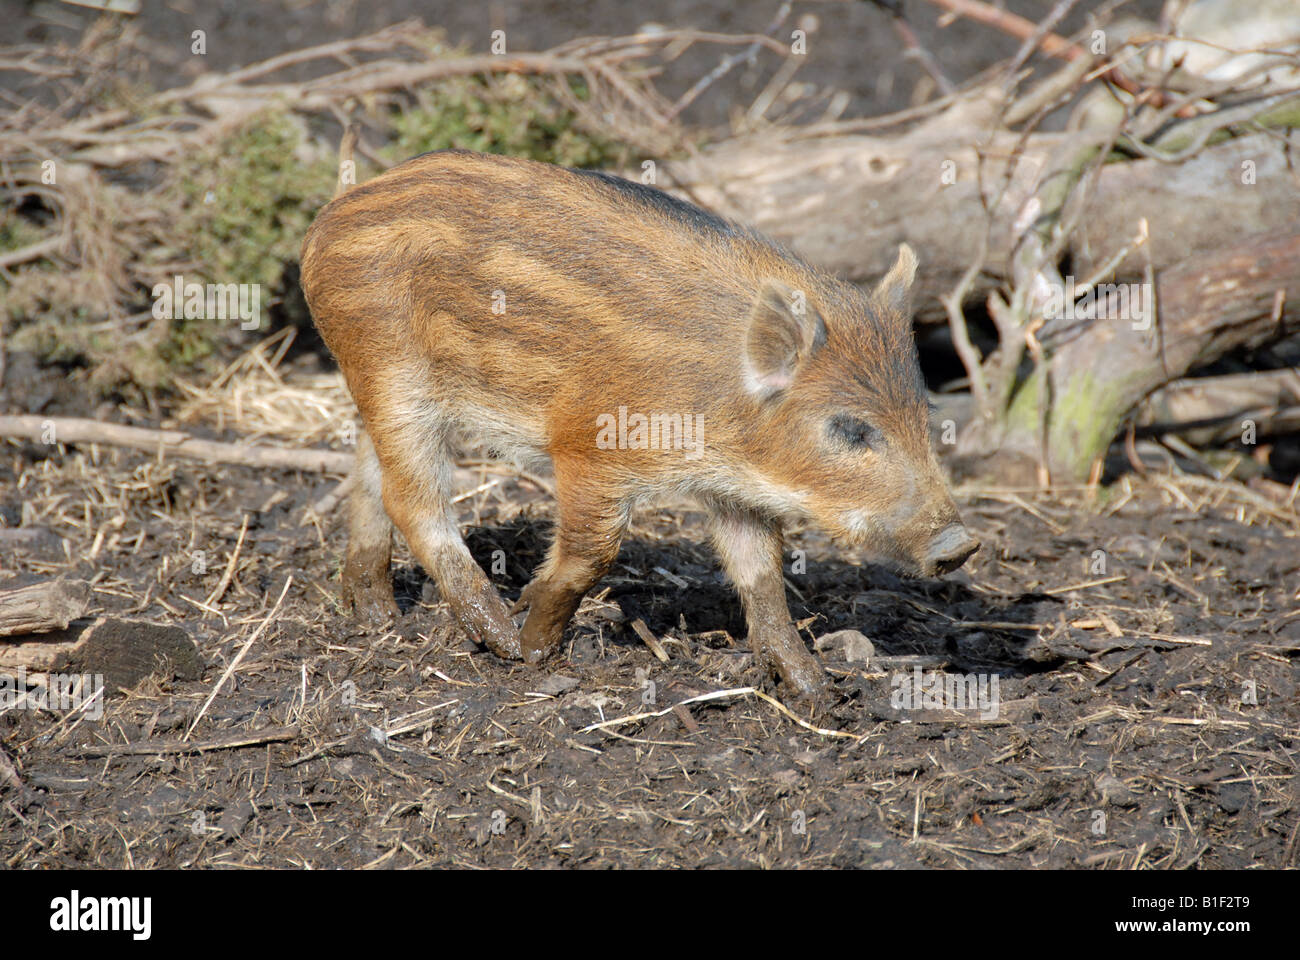 Warthog Piglet Stock Photo